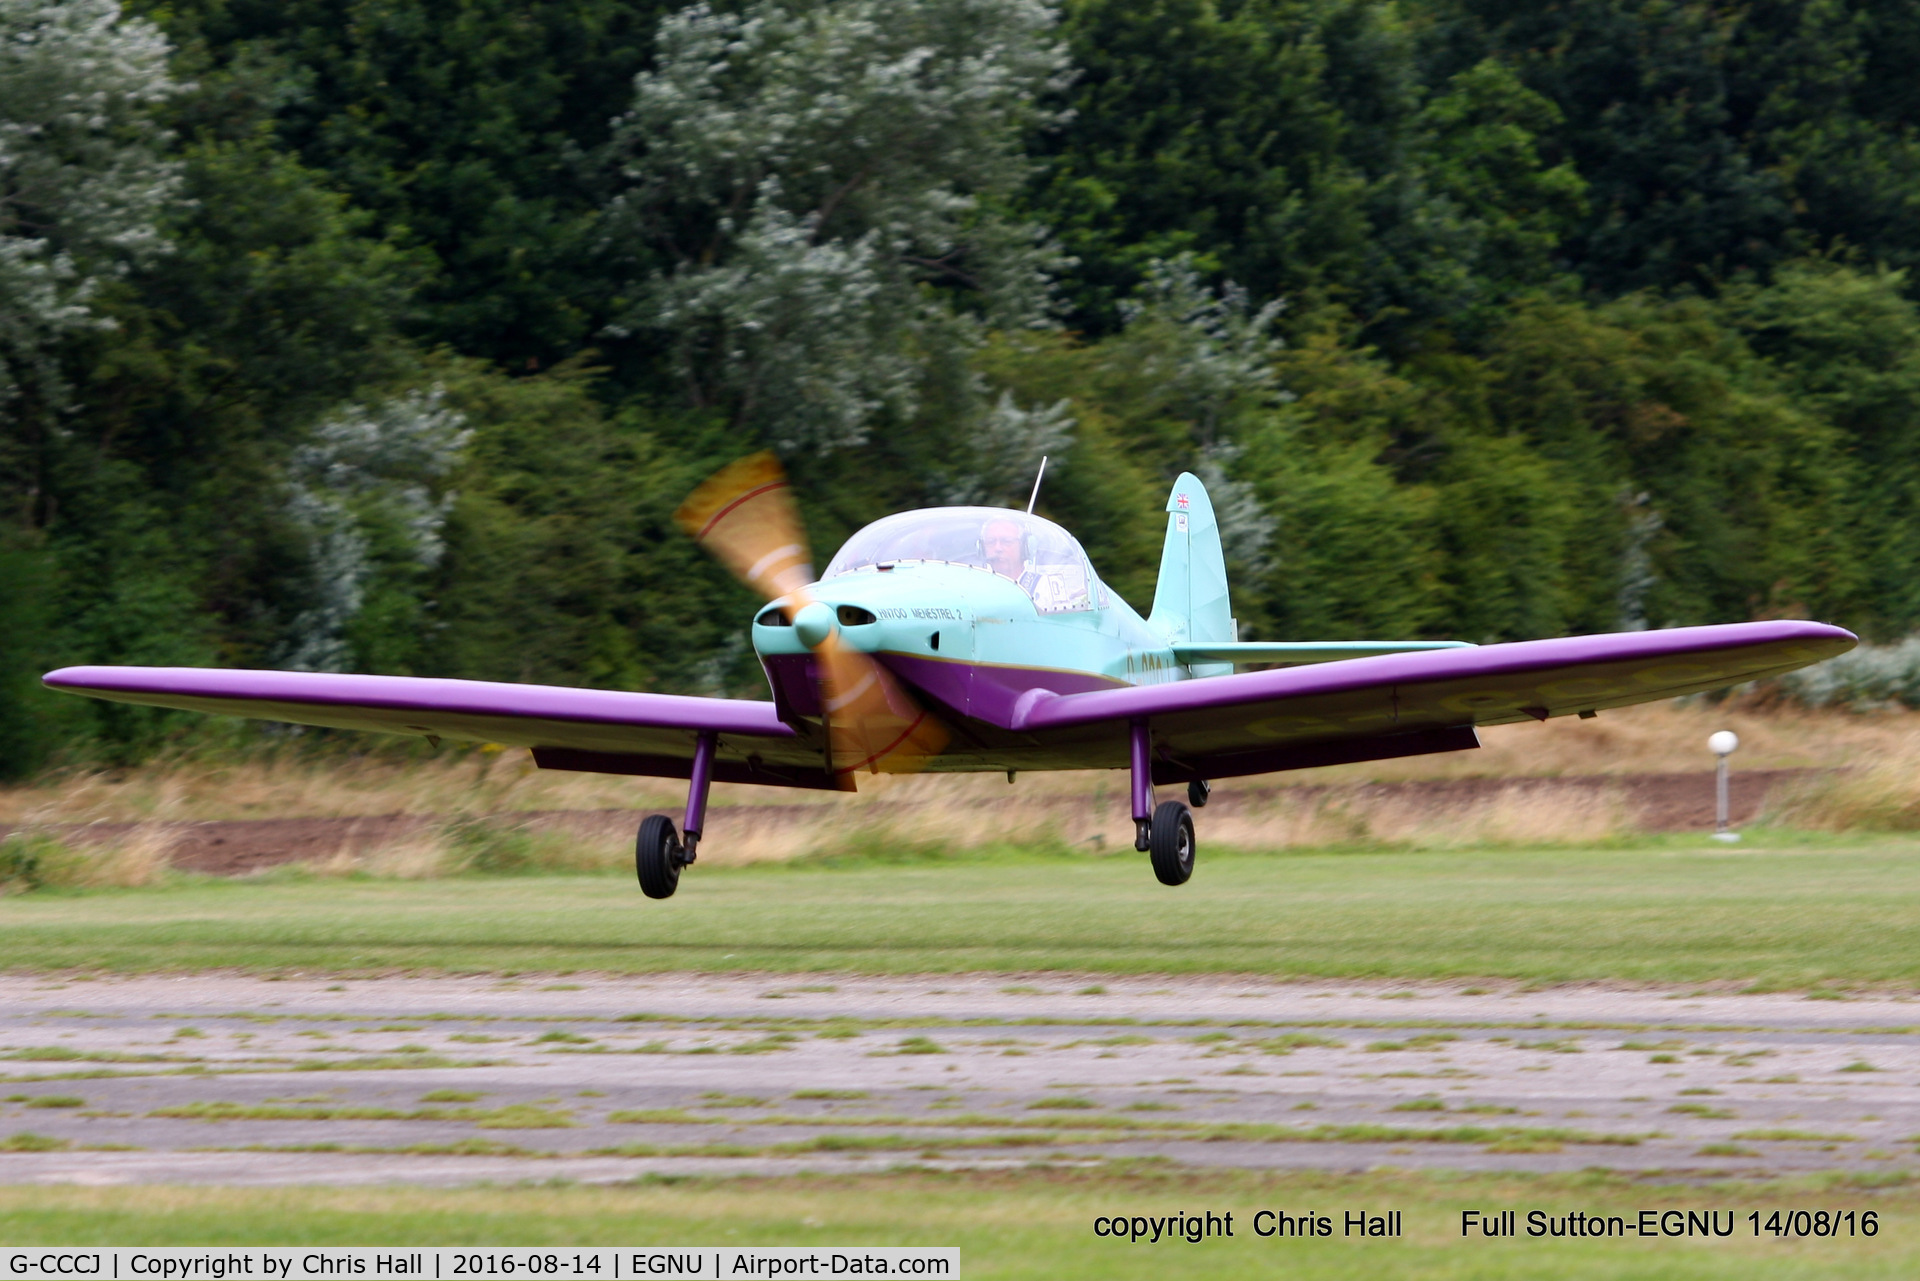 G-CCCJ, 2003 Nicollier HN-700 Menestrel II C/N PFA 217-13707, at the LAA Vale of York Strut fly-in, Full Sutton